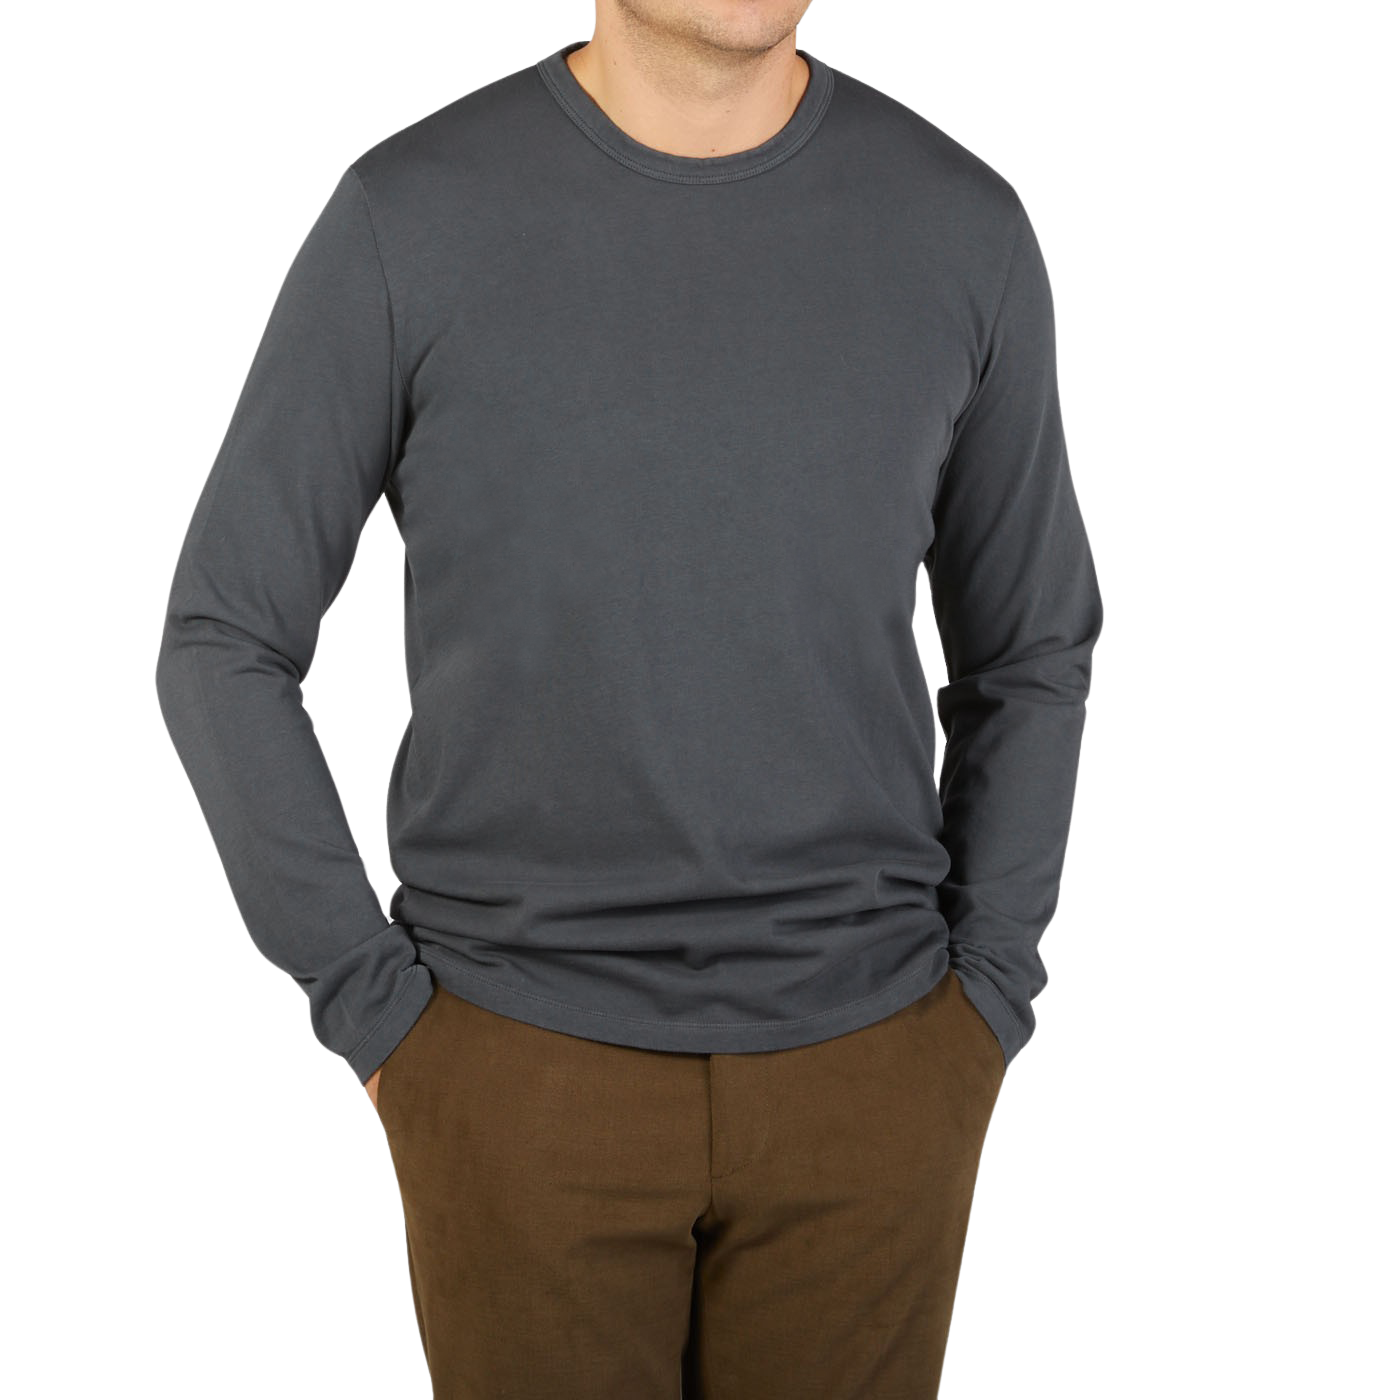 A man wearing the Tela Genova Asphalt Grey Cotton LS T-Shirt.